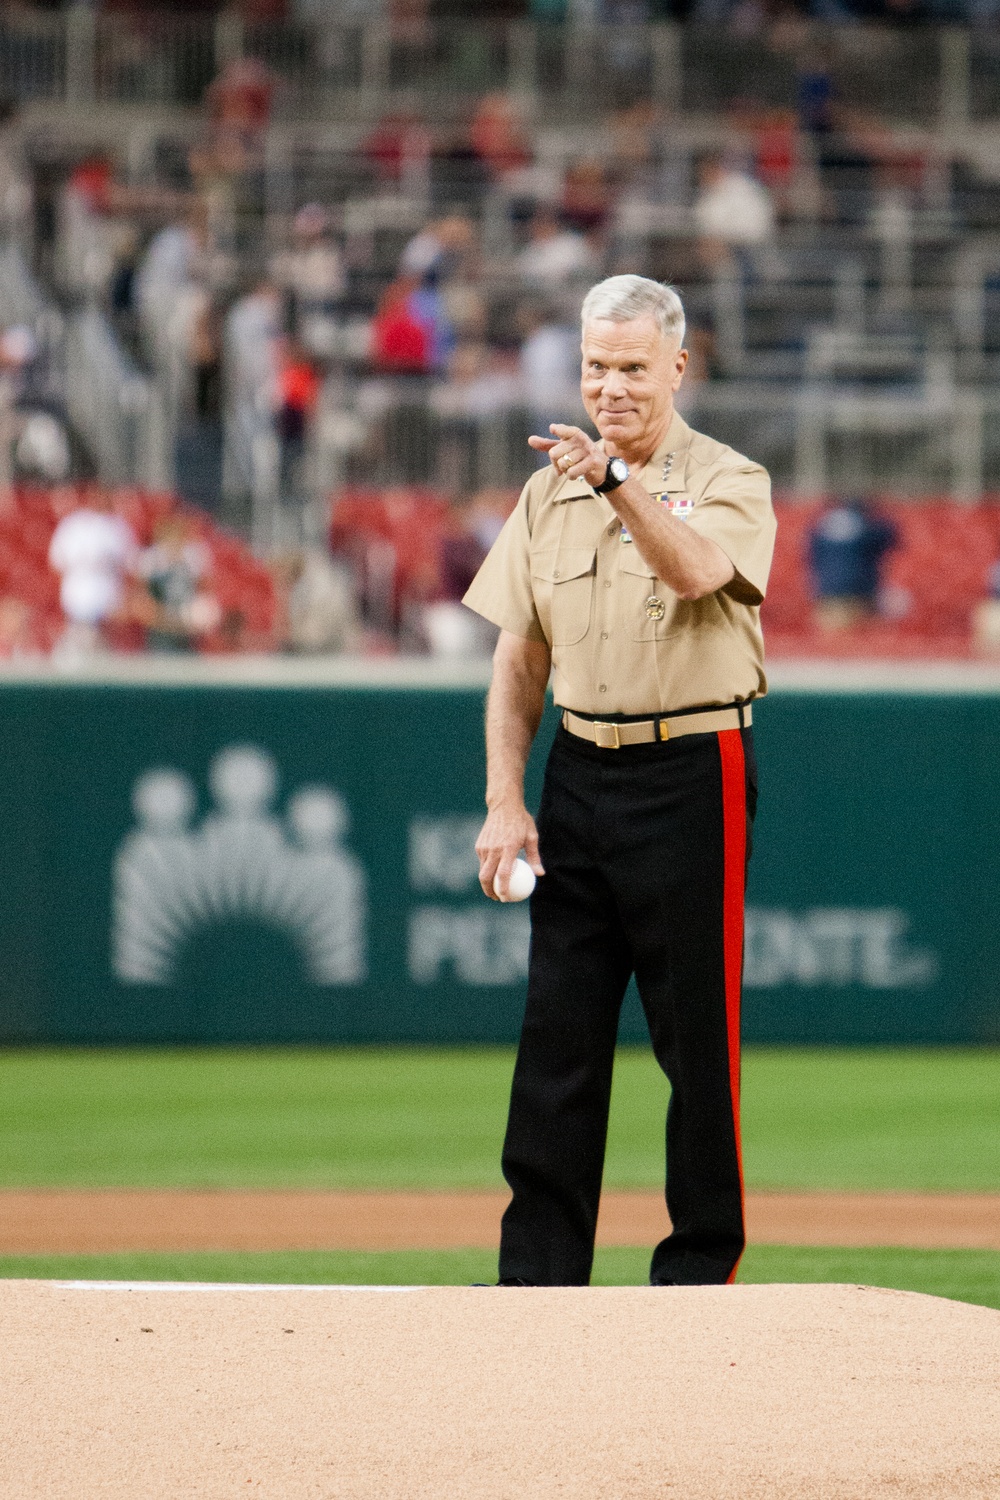 Marines honored in midst of Nationals’ winning streak